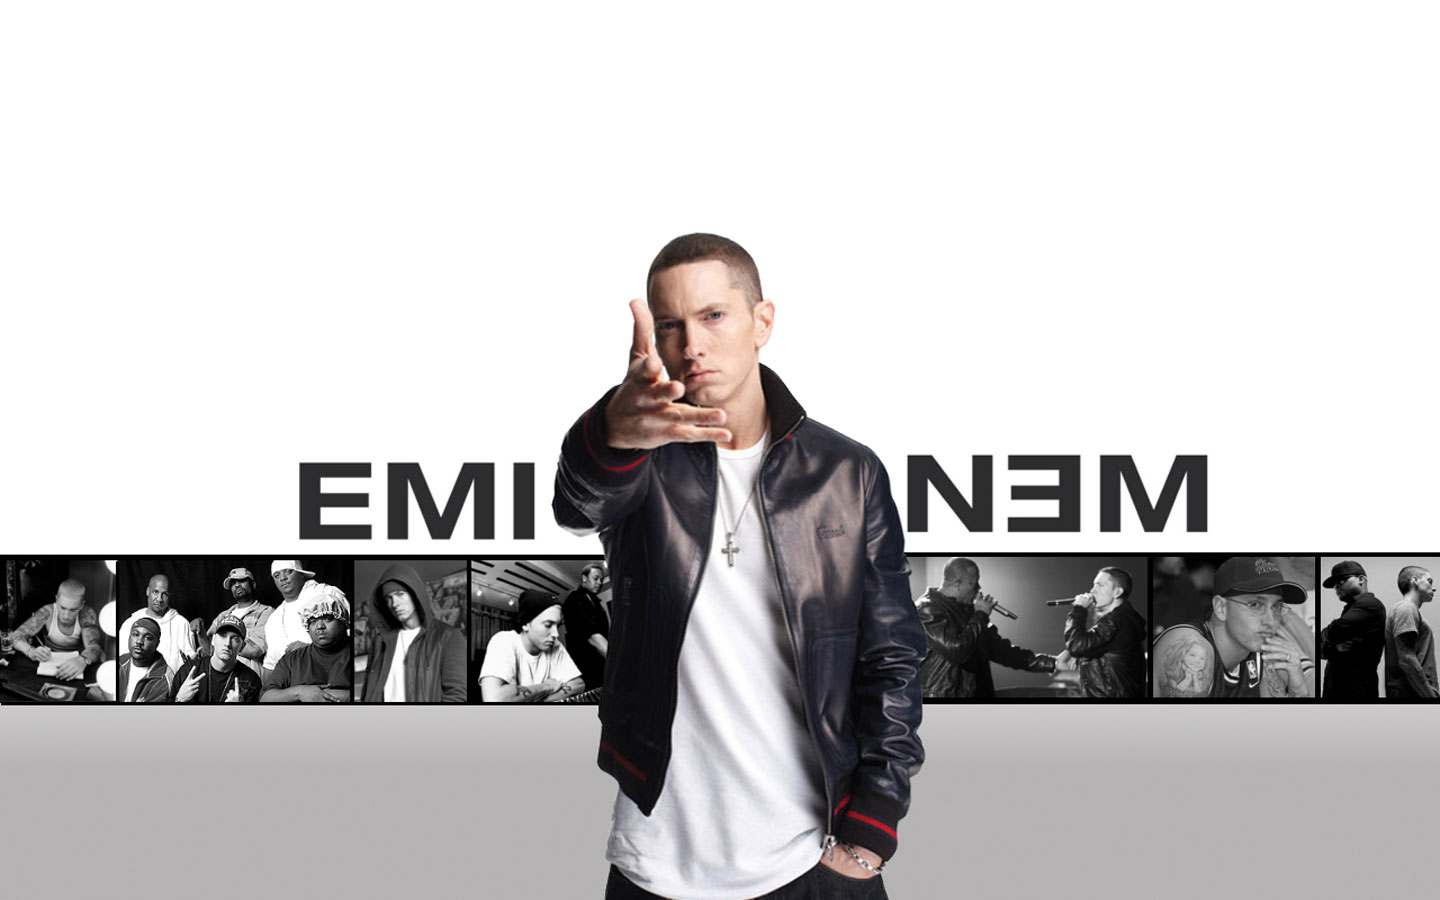 Wallpaper Eminem Desktop Pictures To Pin